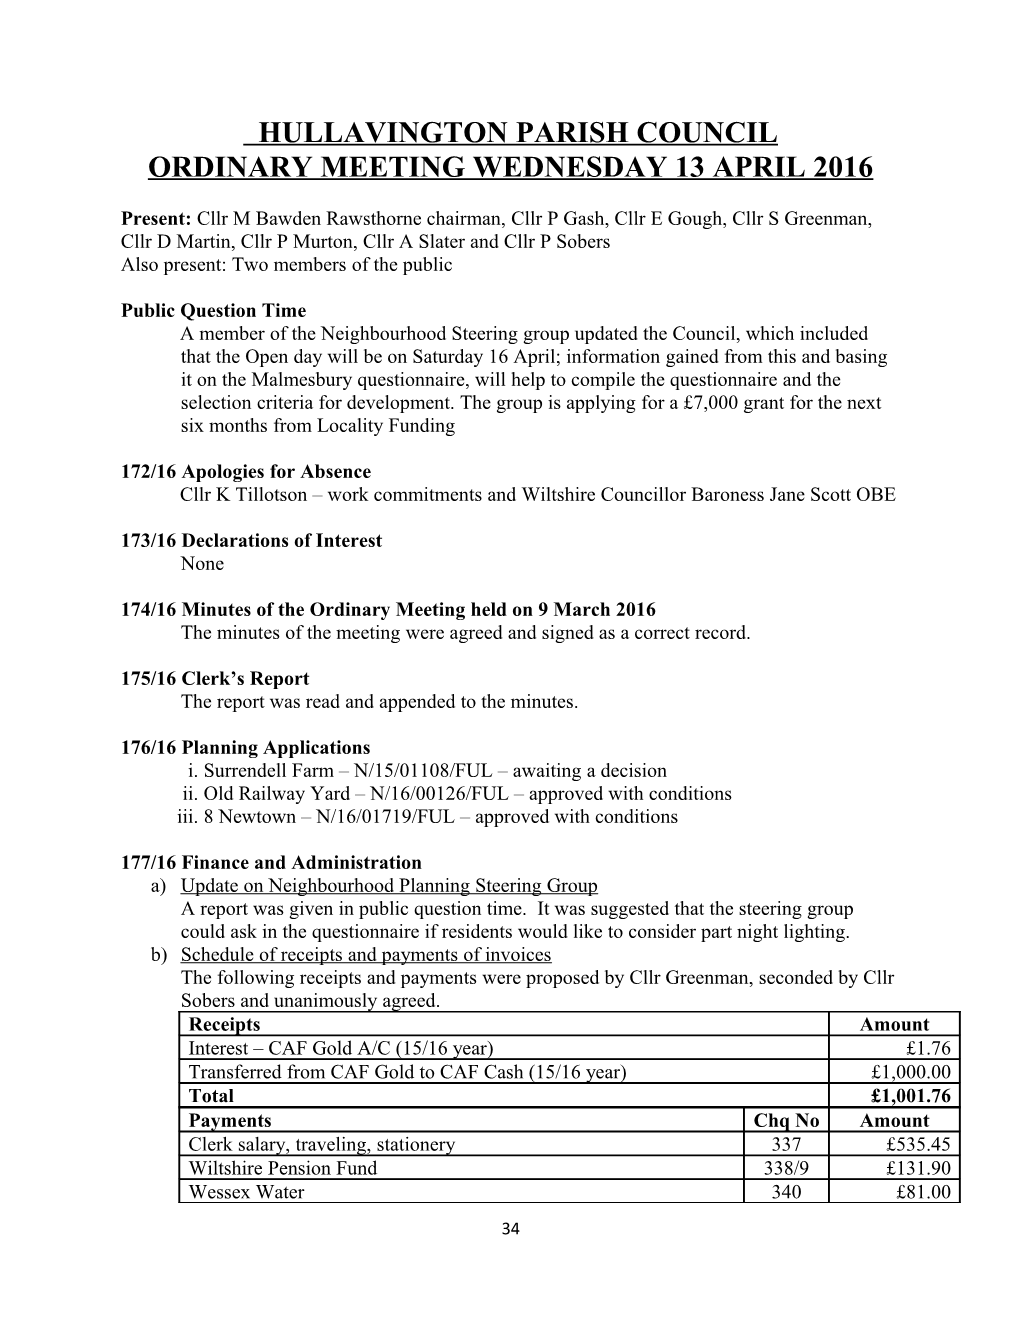 Ordinary Meeting Wednesday 13 April 2016